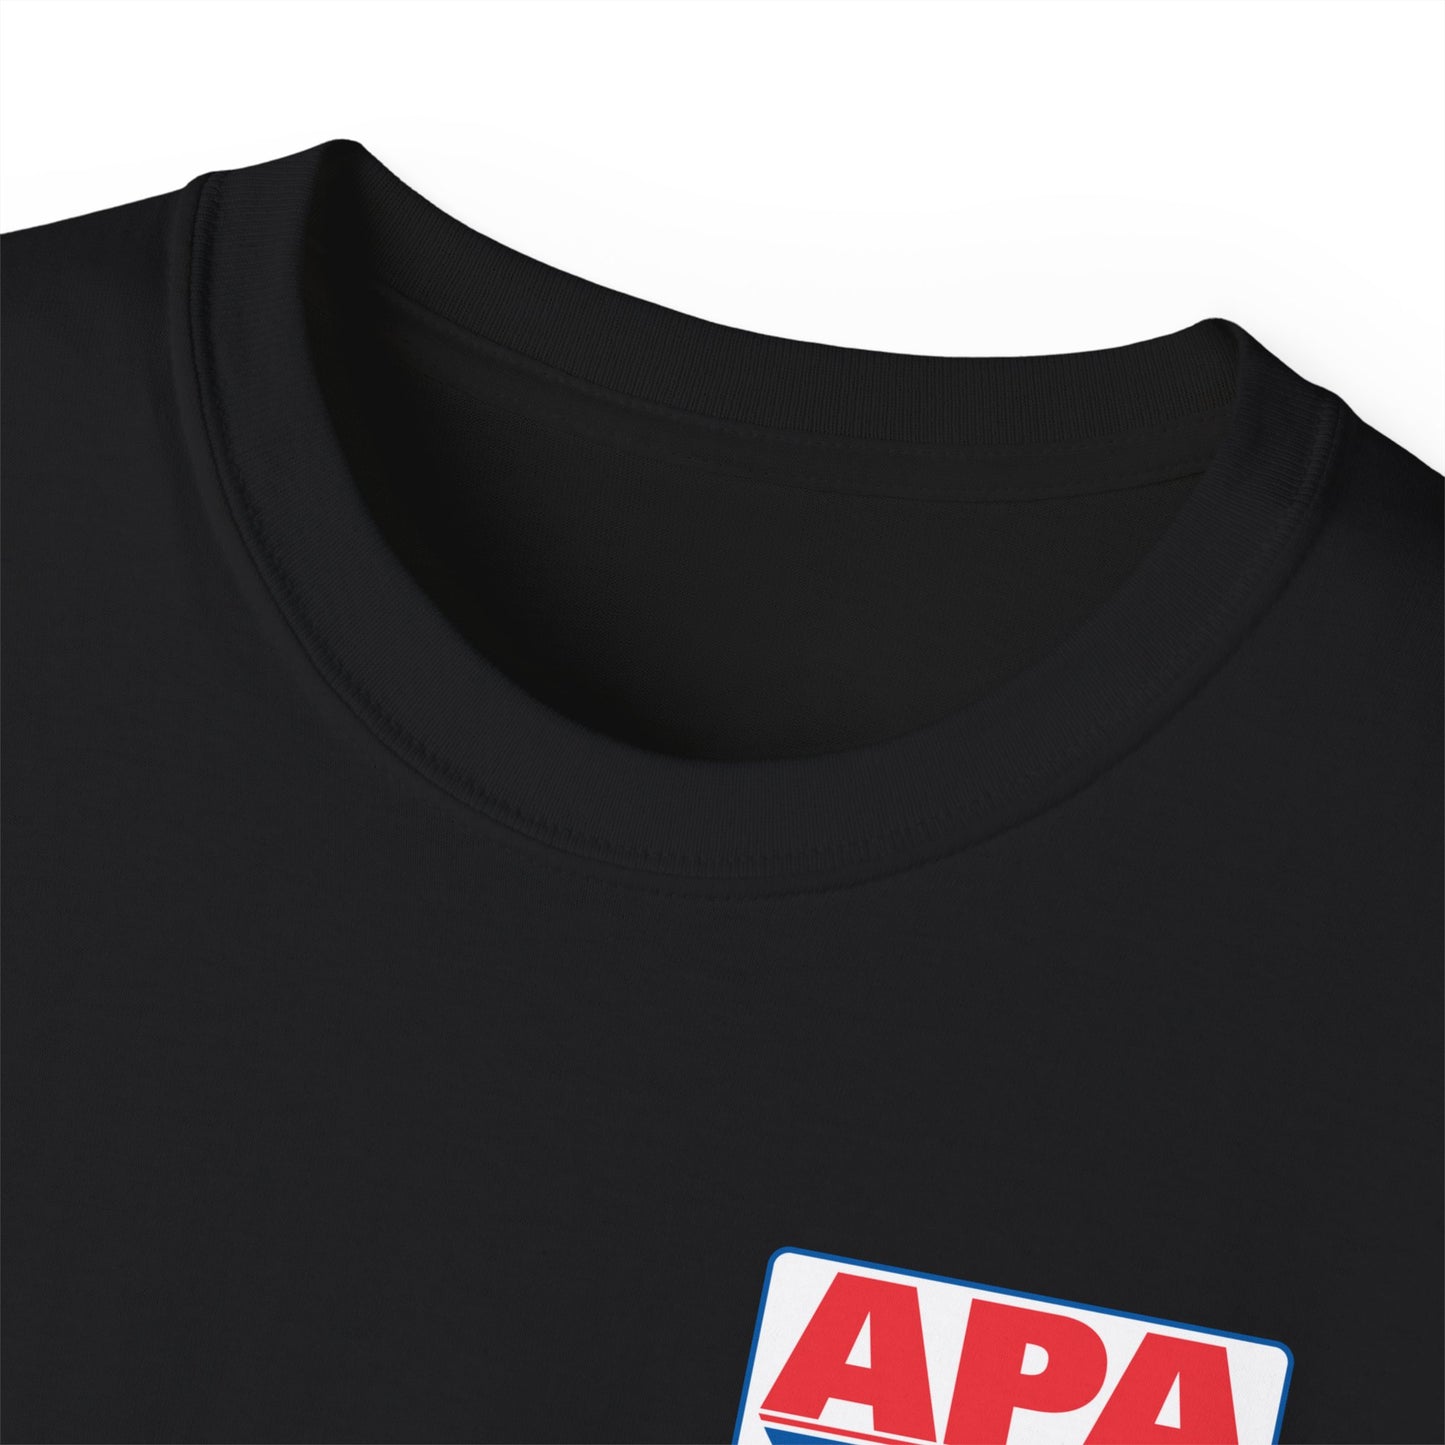 CPA 8-Ball Break & Run T-Shirt